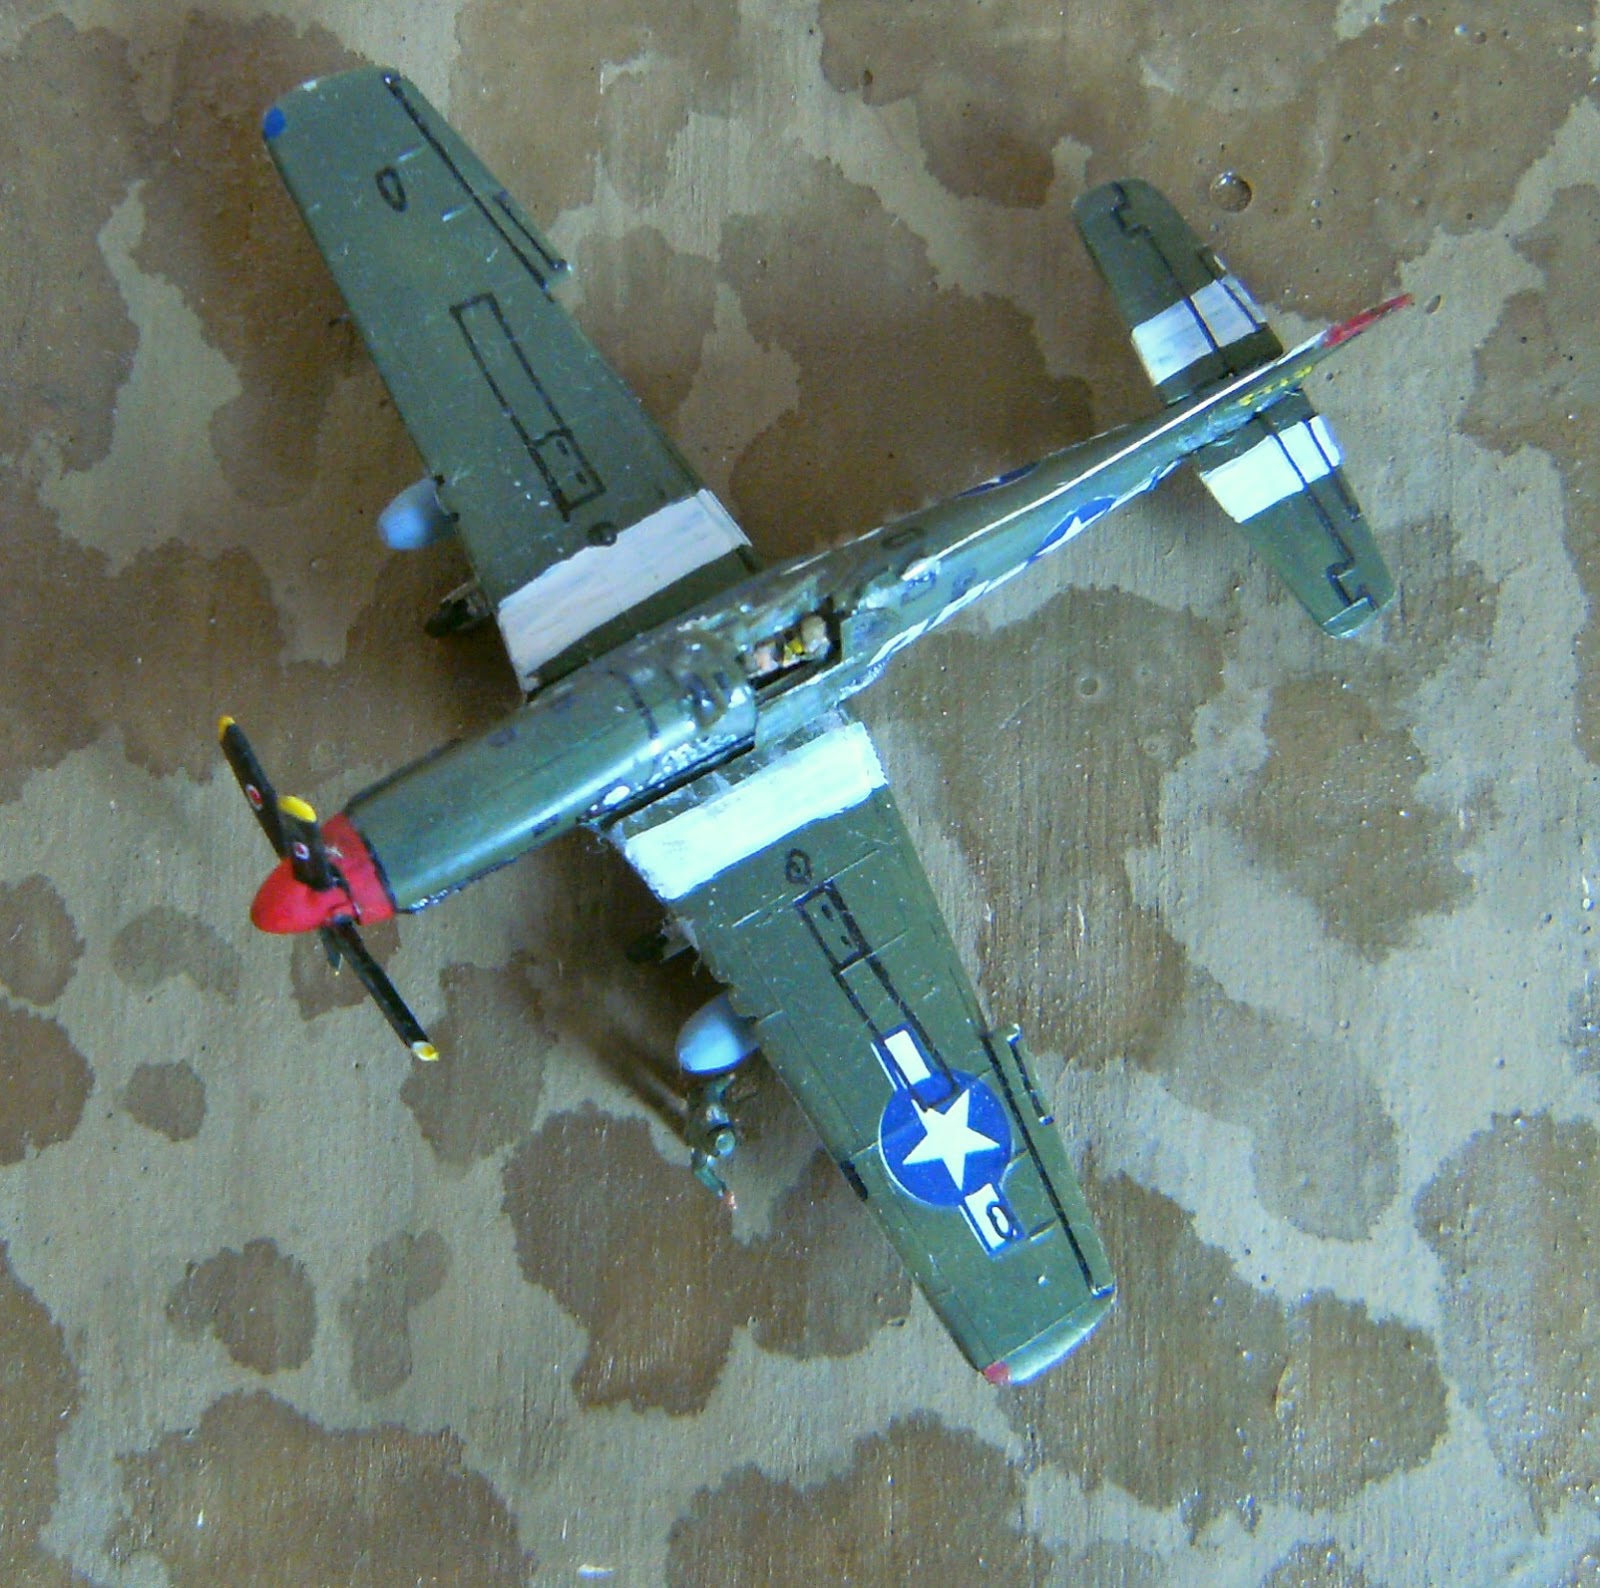 Happyscale-Modellbau: North American P-51B Mustang - 1/144